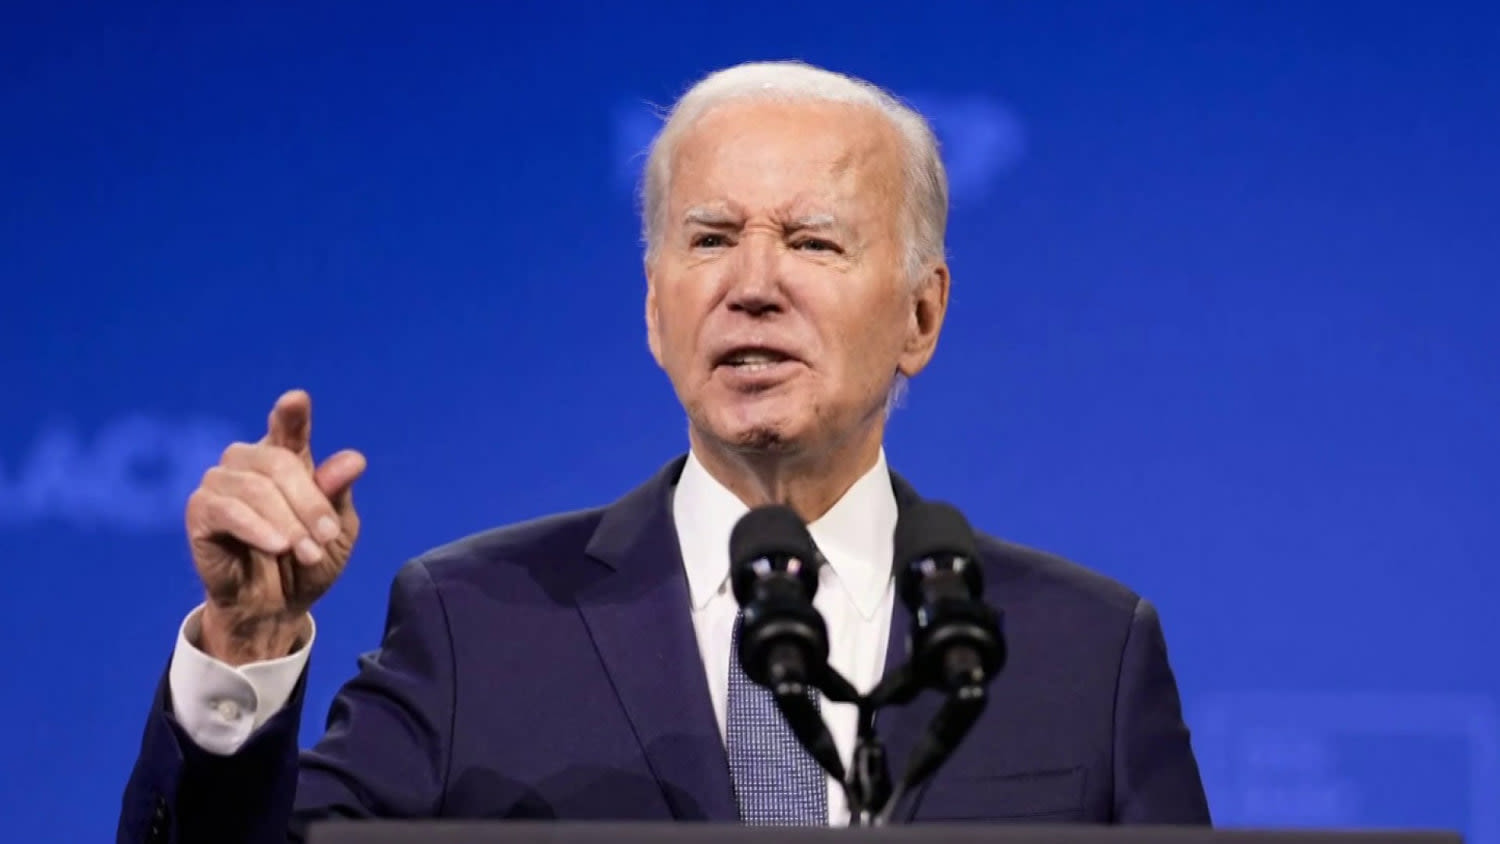 Joe: Democrats need to fish or cut bait with Biden